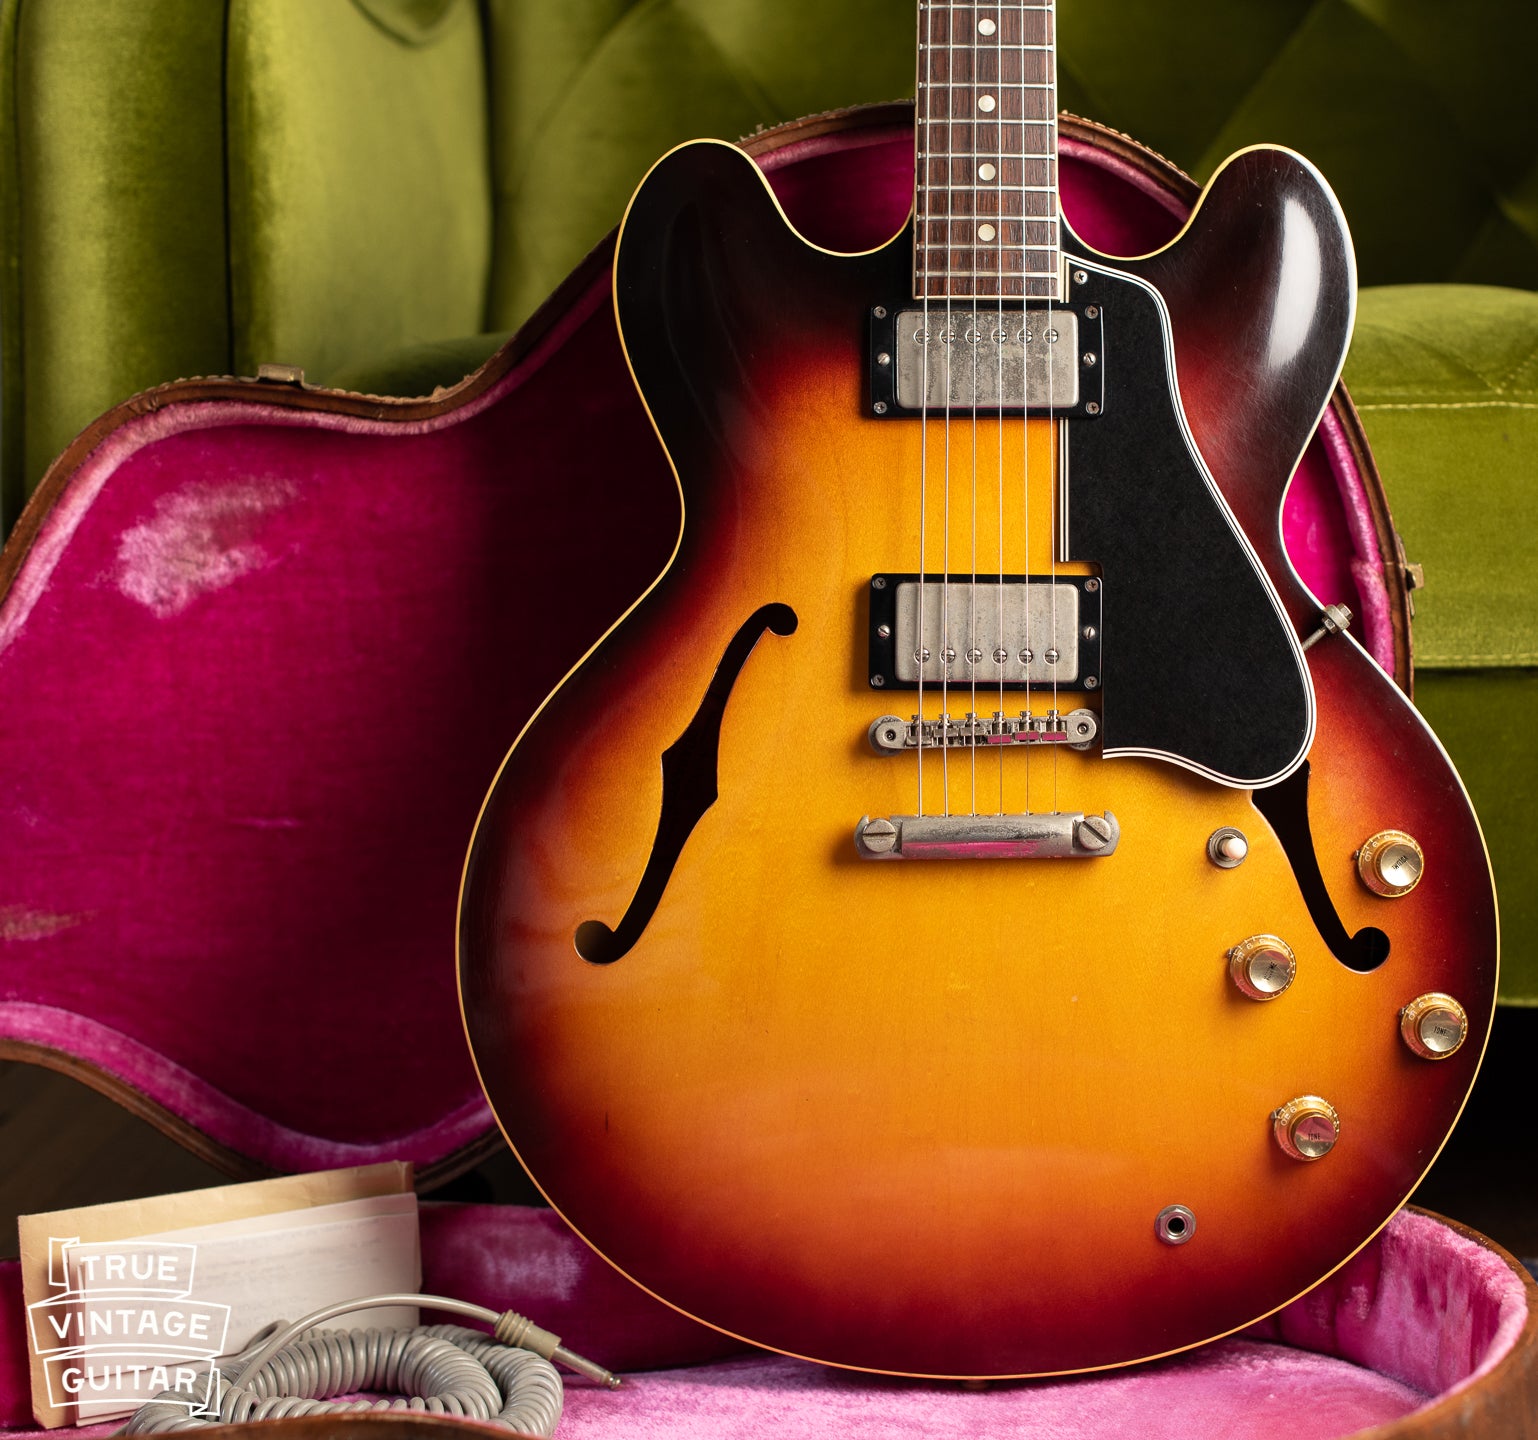 1960 Gibson ES-335 Gibson guitar buyer